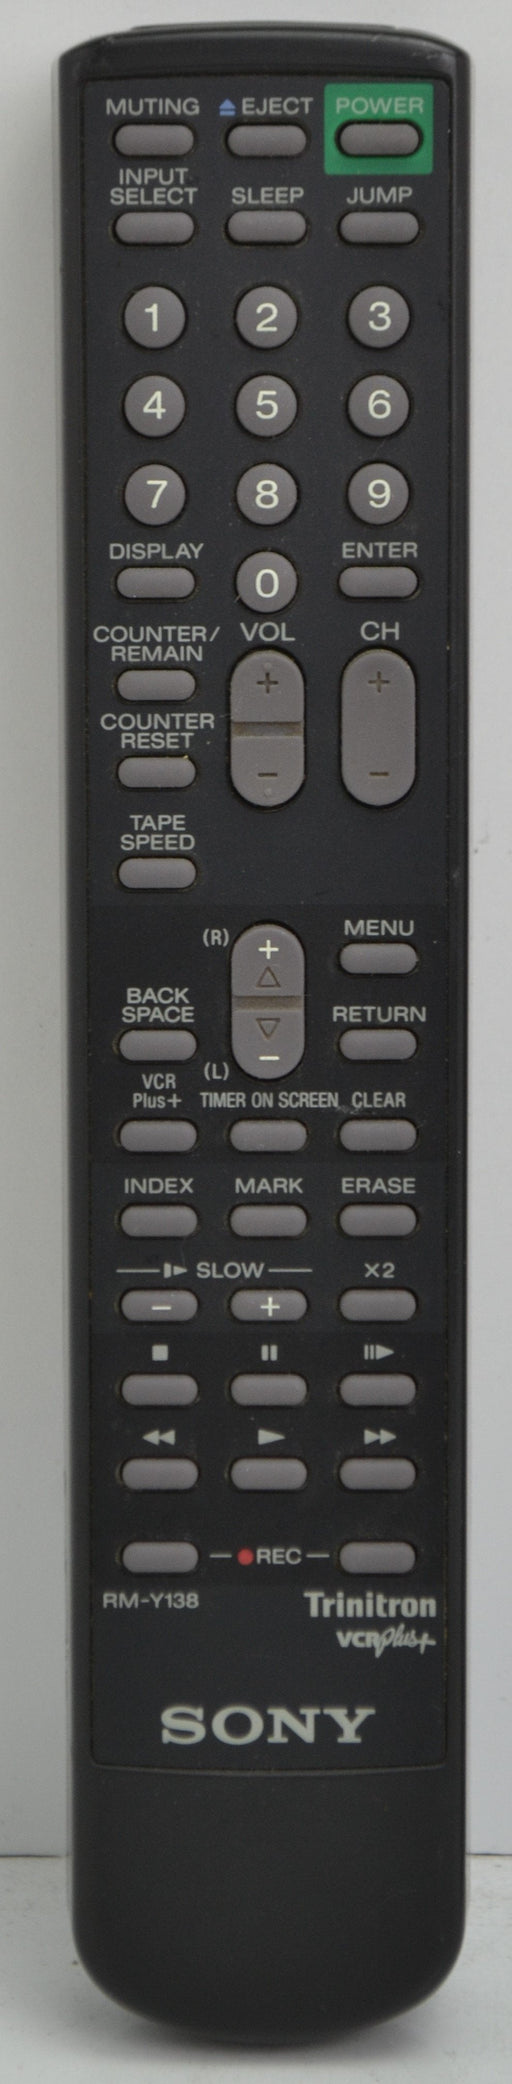 Sony RM-Y138 Trinitron VHS Player VCR/TV Remote Control KV0VM30 KV136VM30 KV13TR28 KV13VM30 KV13VM31 KV20BM30 KV20M30 KV20MV30 KV20VM KV20VM30 KV30M30 P52150CPN02 SJV20VM30-Remote-SpenCertified-refurbished-vintage-electonics